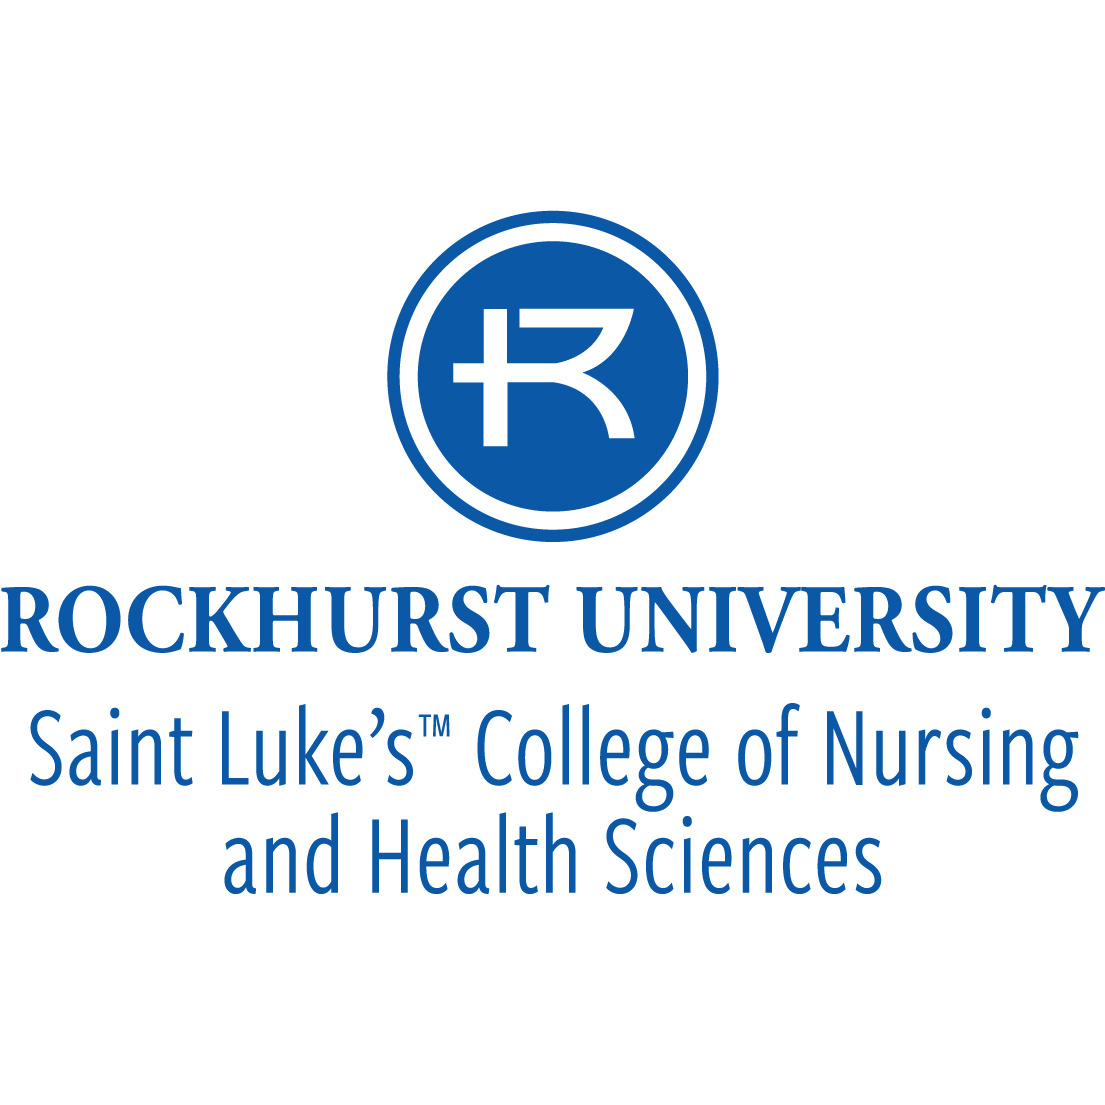 Saint Luke's College of Nursing and Health Sciences